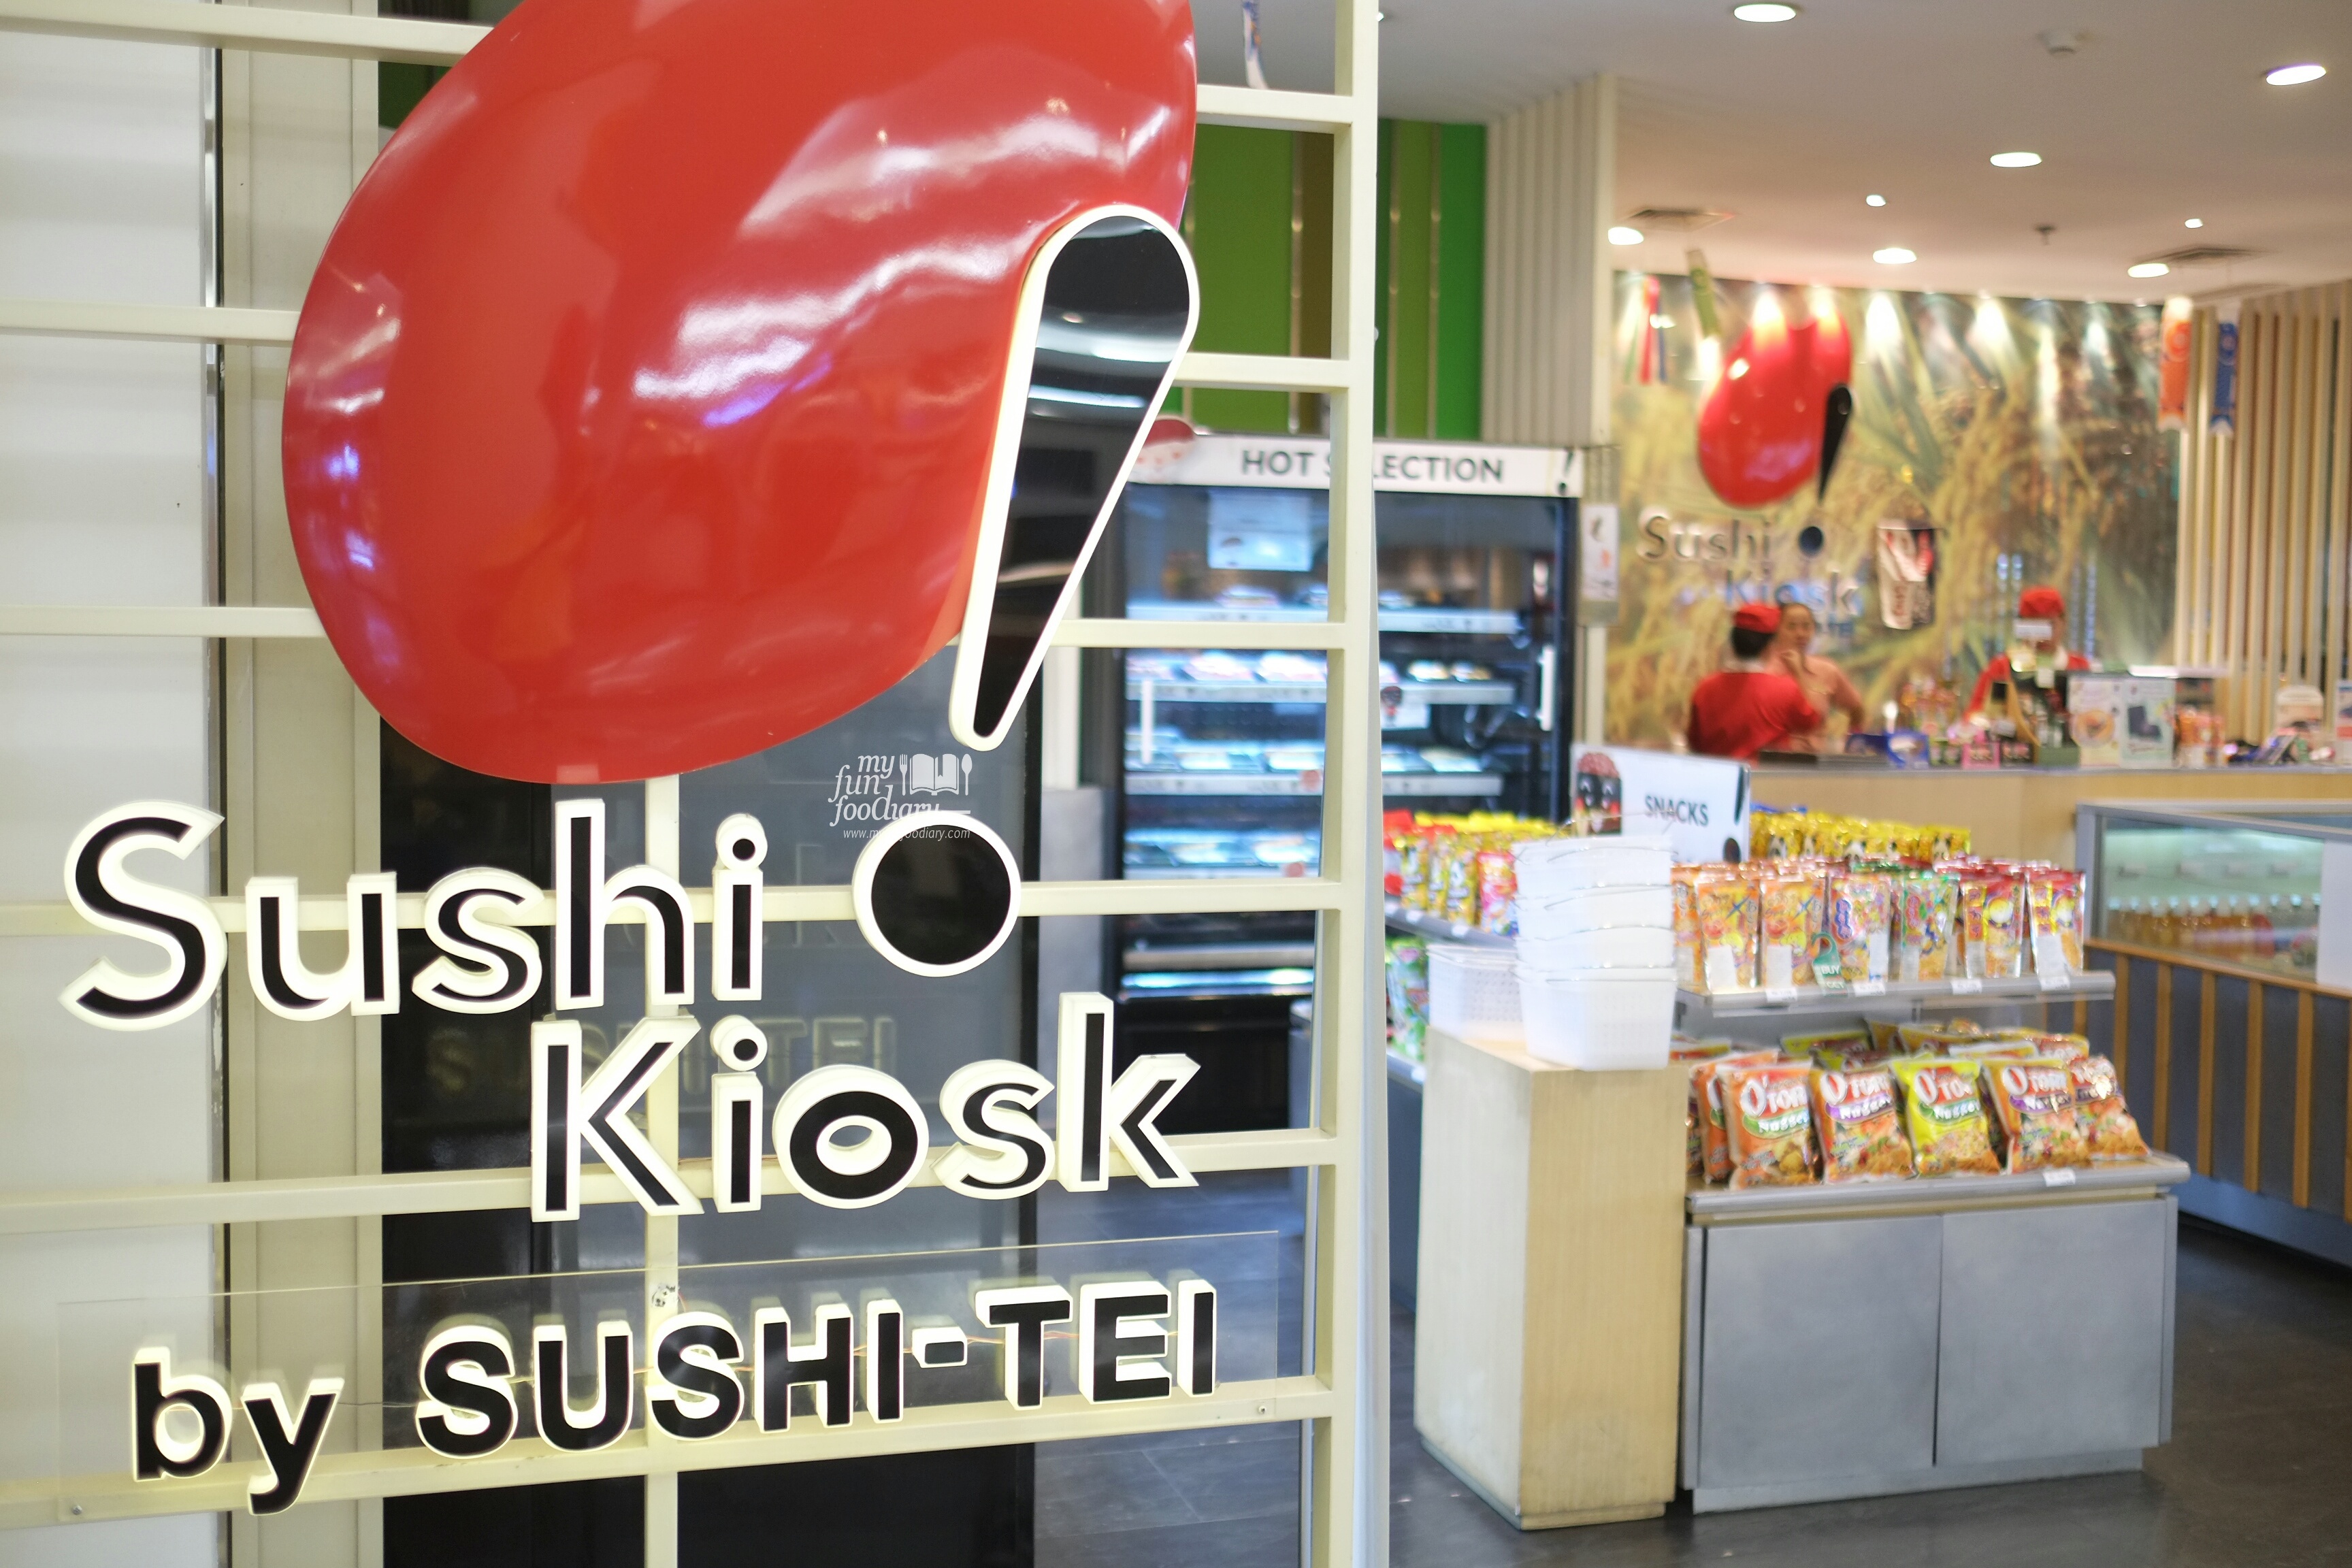 Sushi Kiosk by Sushi Tei - by Myfunfoodiary